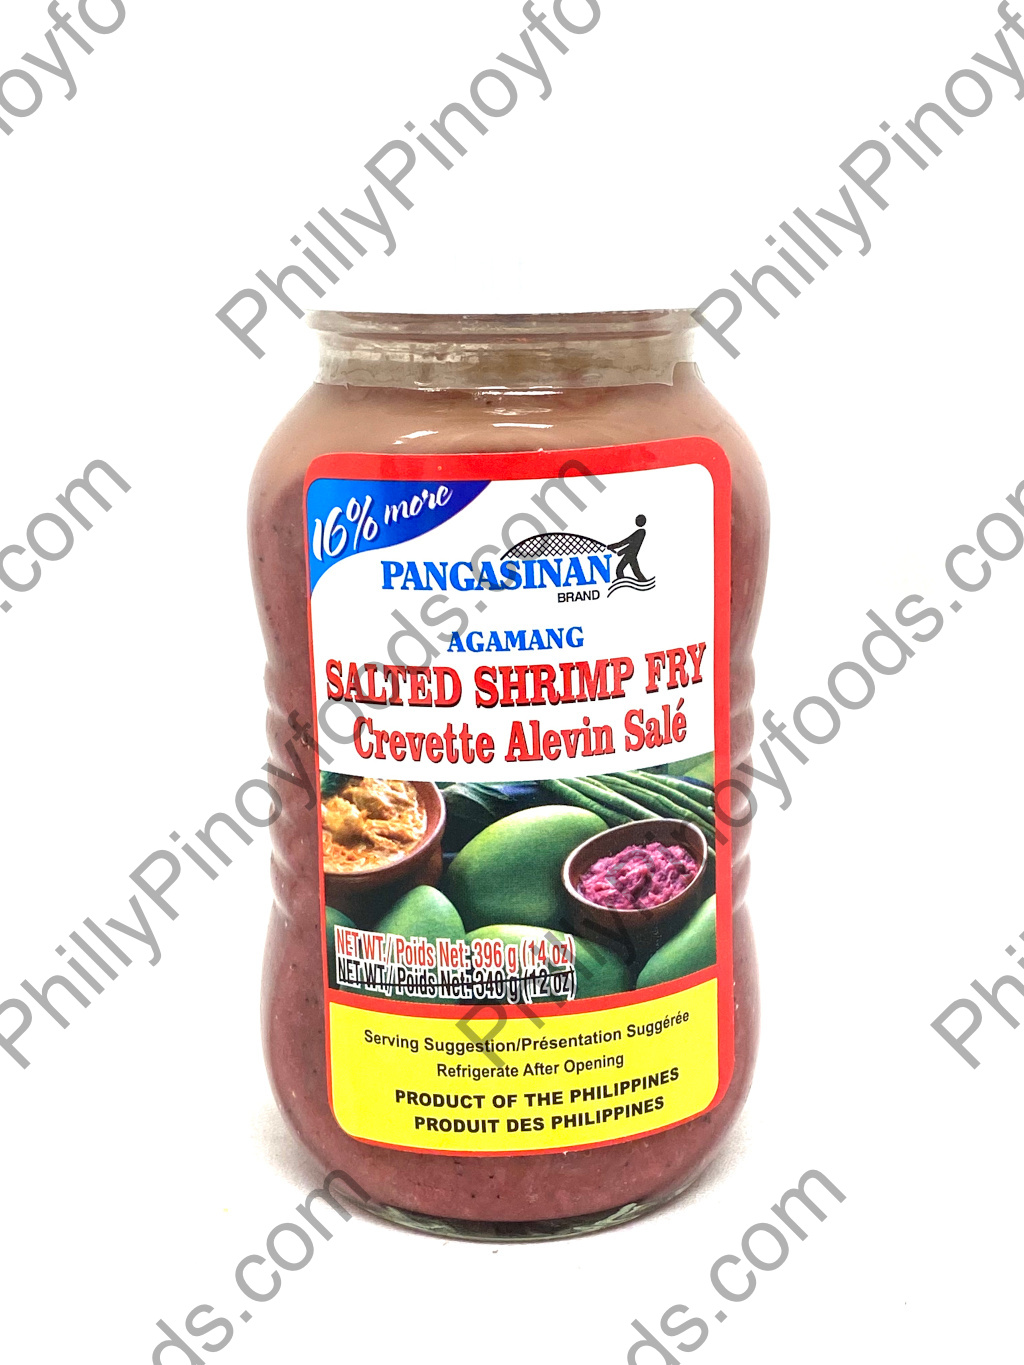 Pangasinan Salted Shrimp Fry 12oz